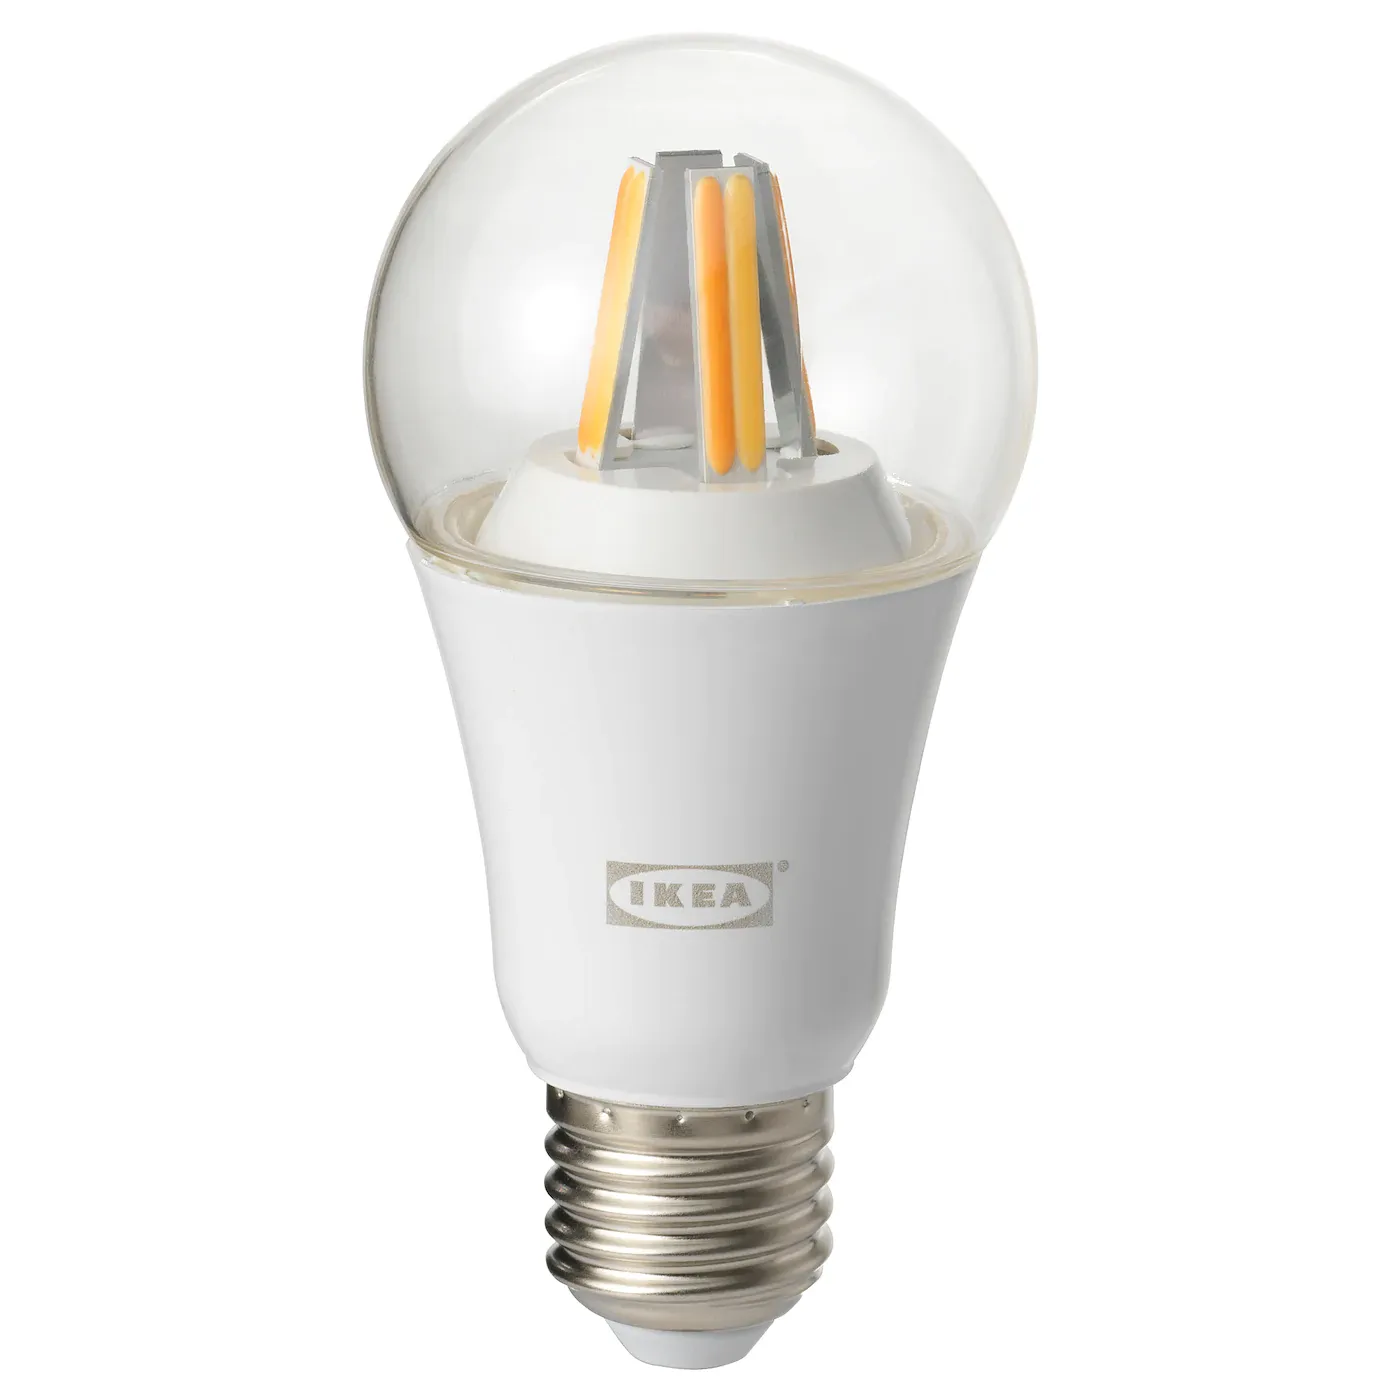 Tradfri LED bulb E27 806 lumen, dimmable, white spectrum, clear